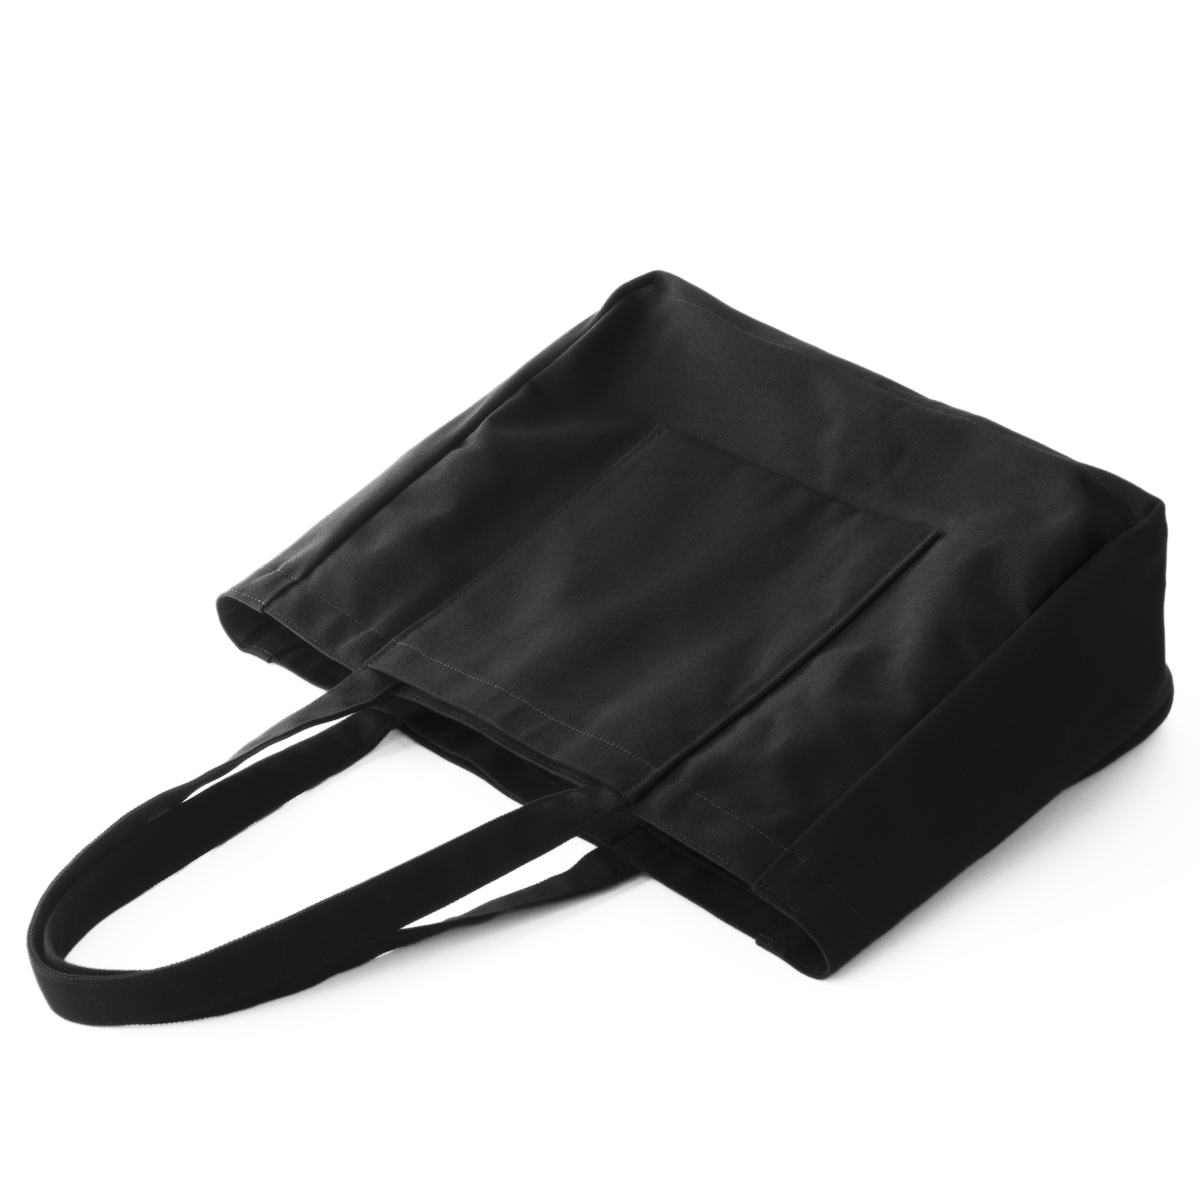 Mackjakors Authentic Bag Female Summer Large Capacity Tote Pack